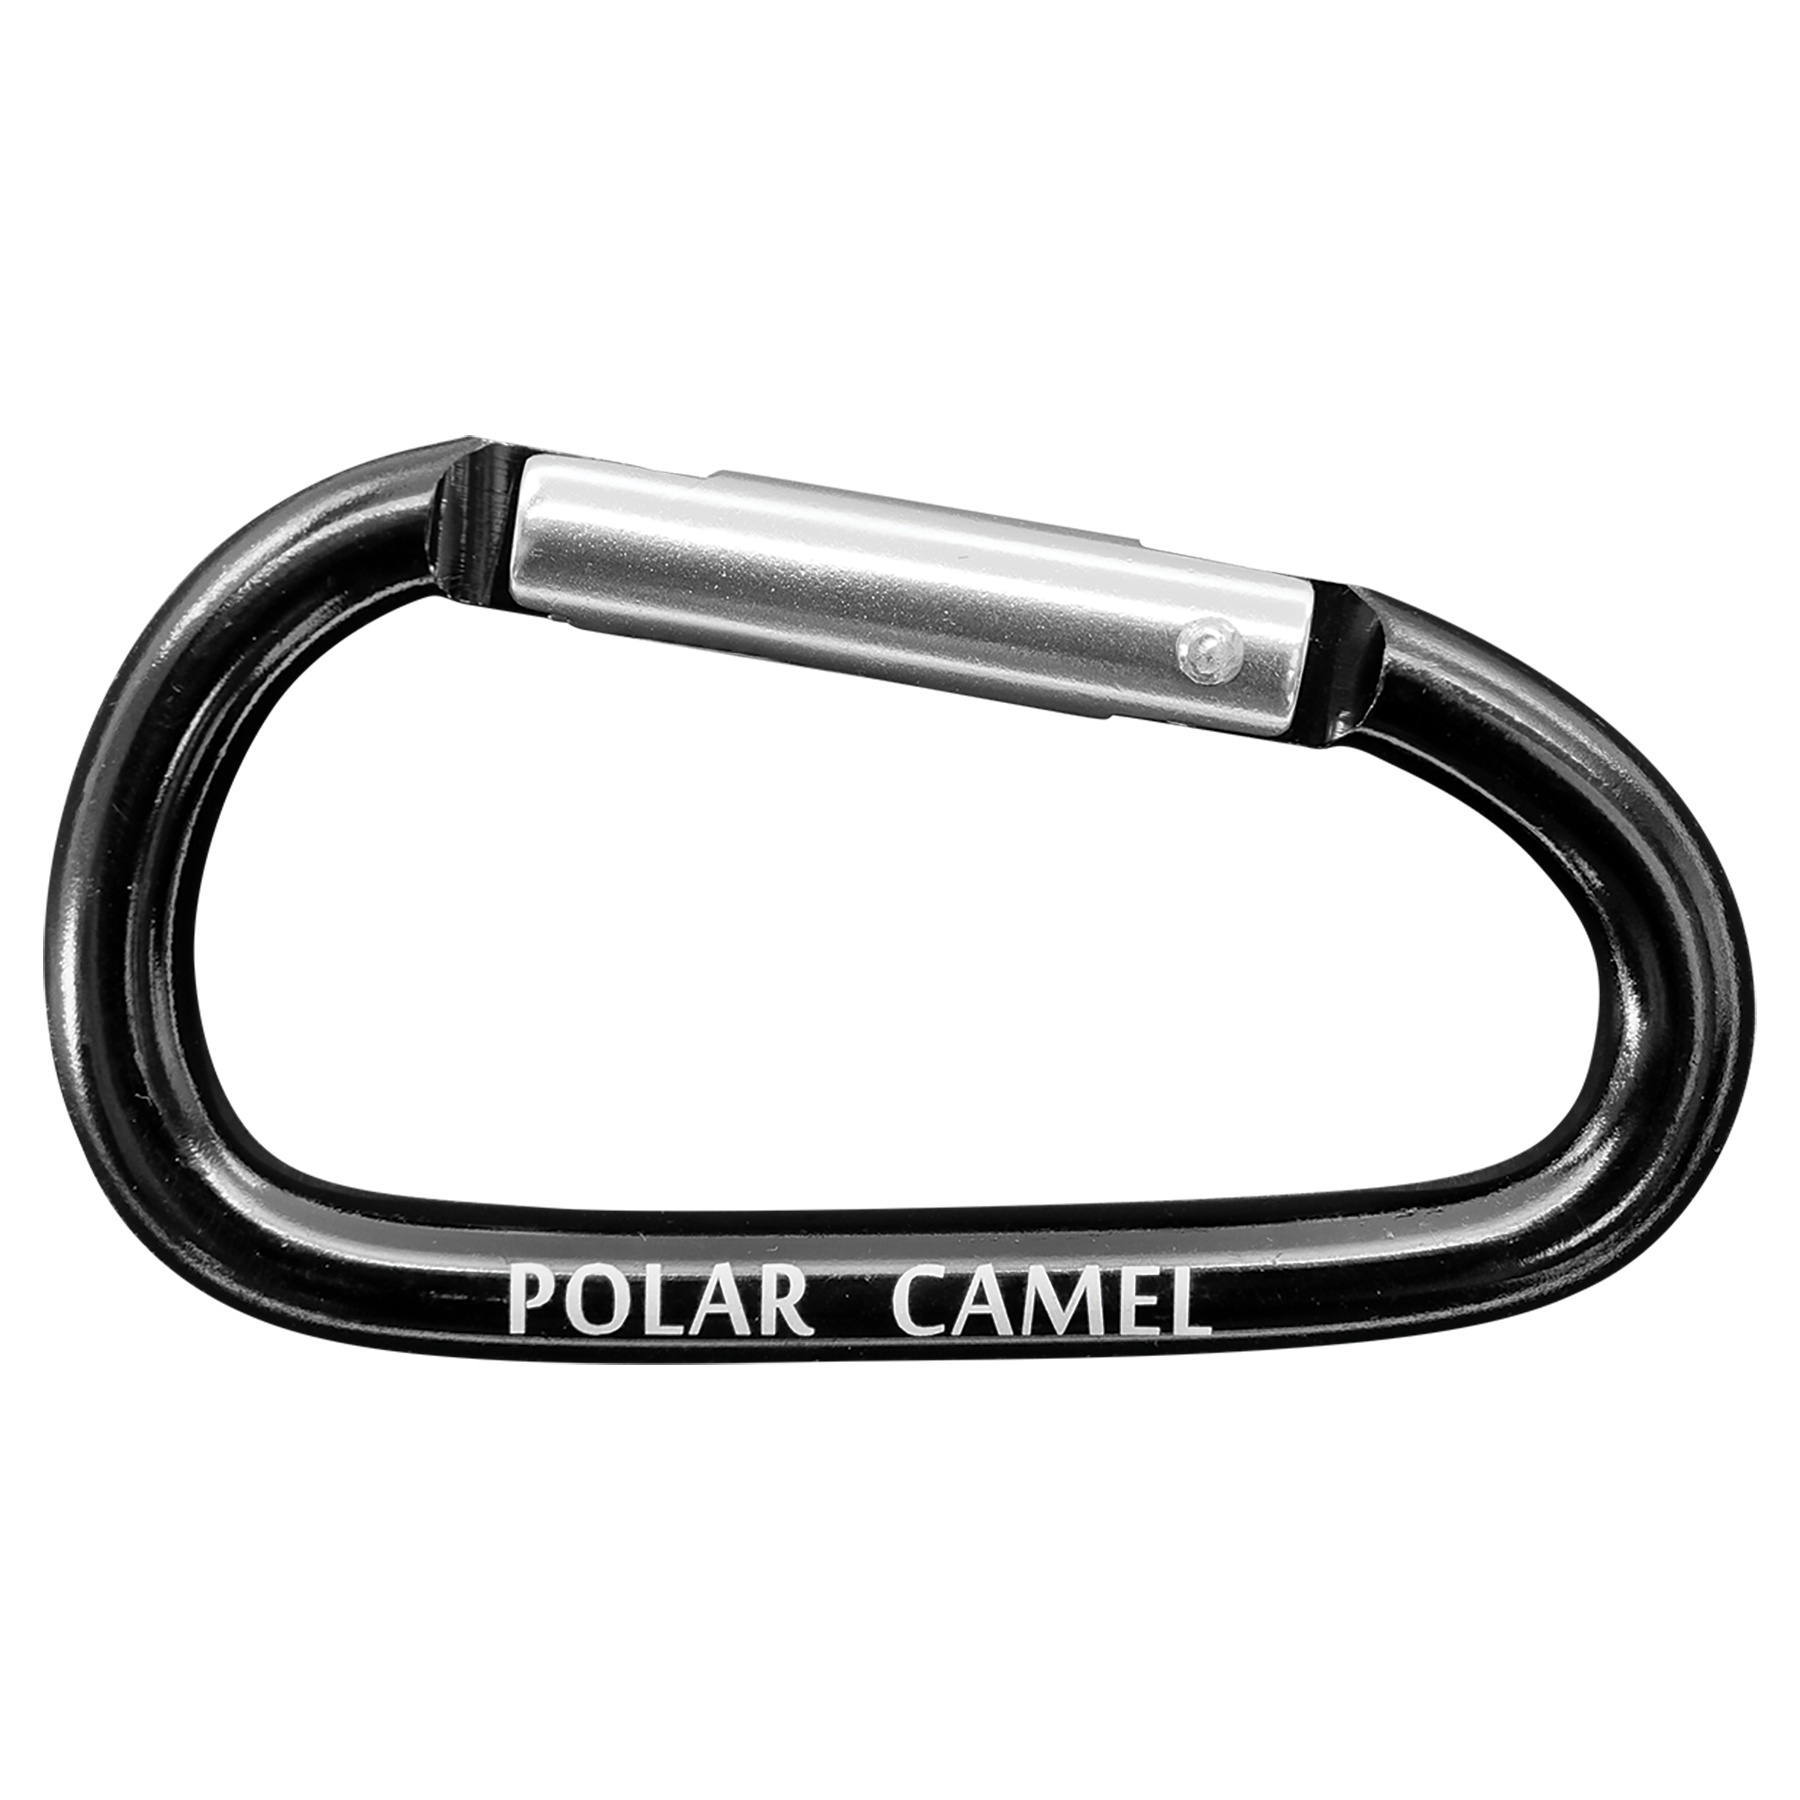 Carabiner for Polar Camel Water Bottles